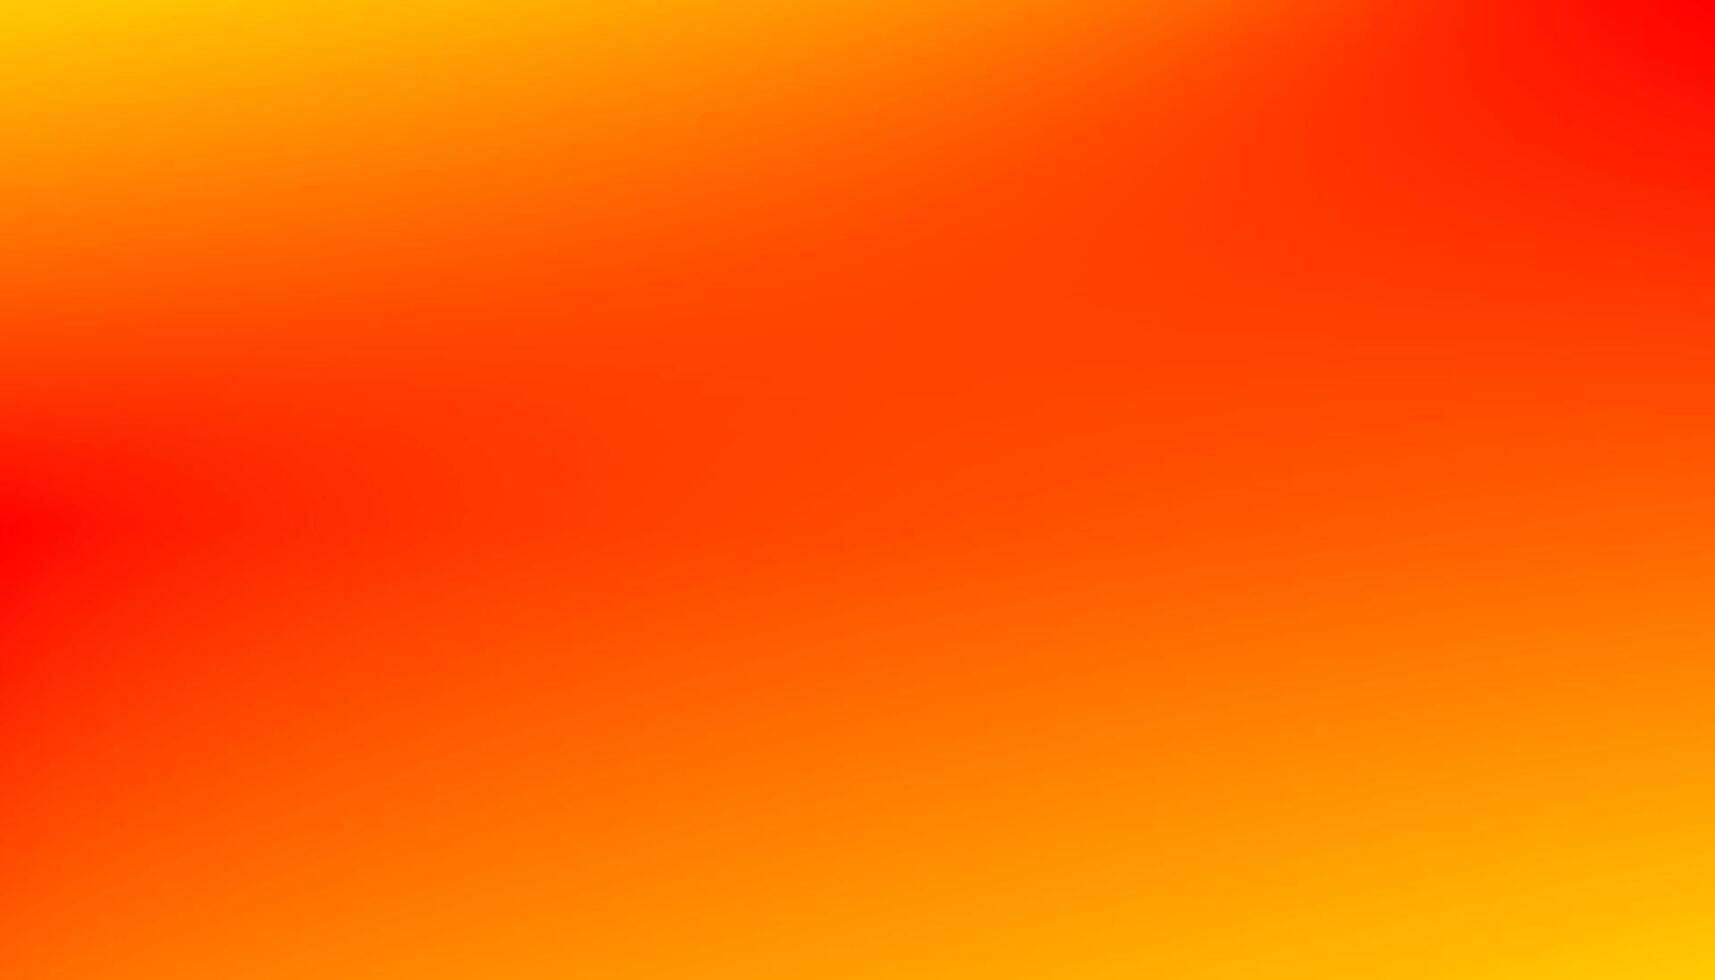 Orange red color gradient background illustration. Smooth modern vector graphic design template for wallpaper, banner, cover, web, digital, flyer, decoration, presentation